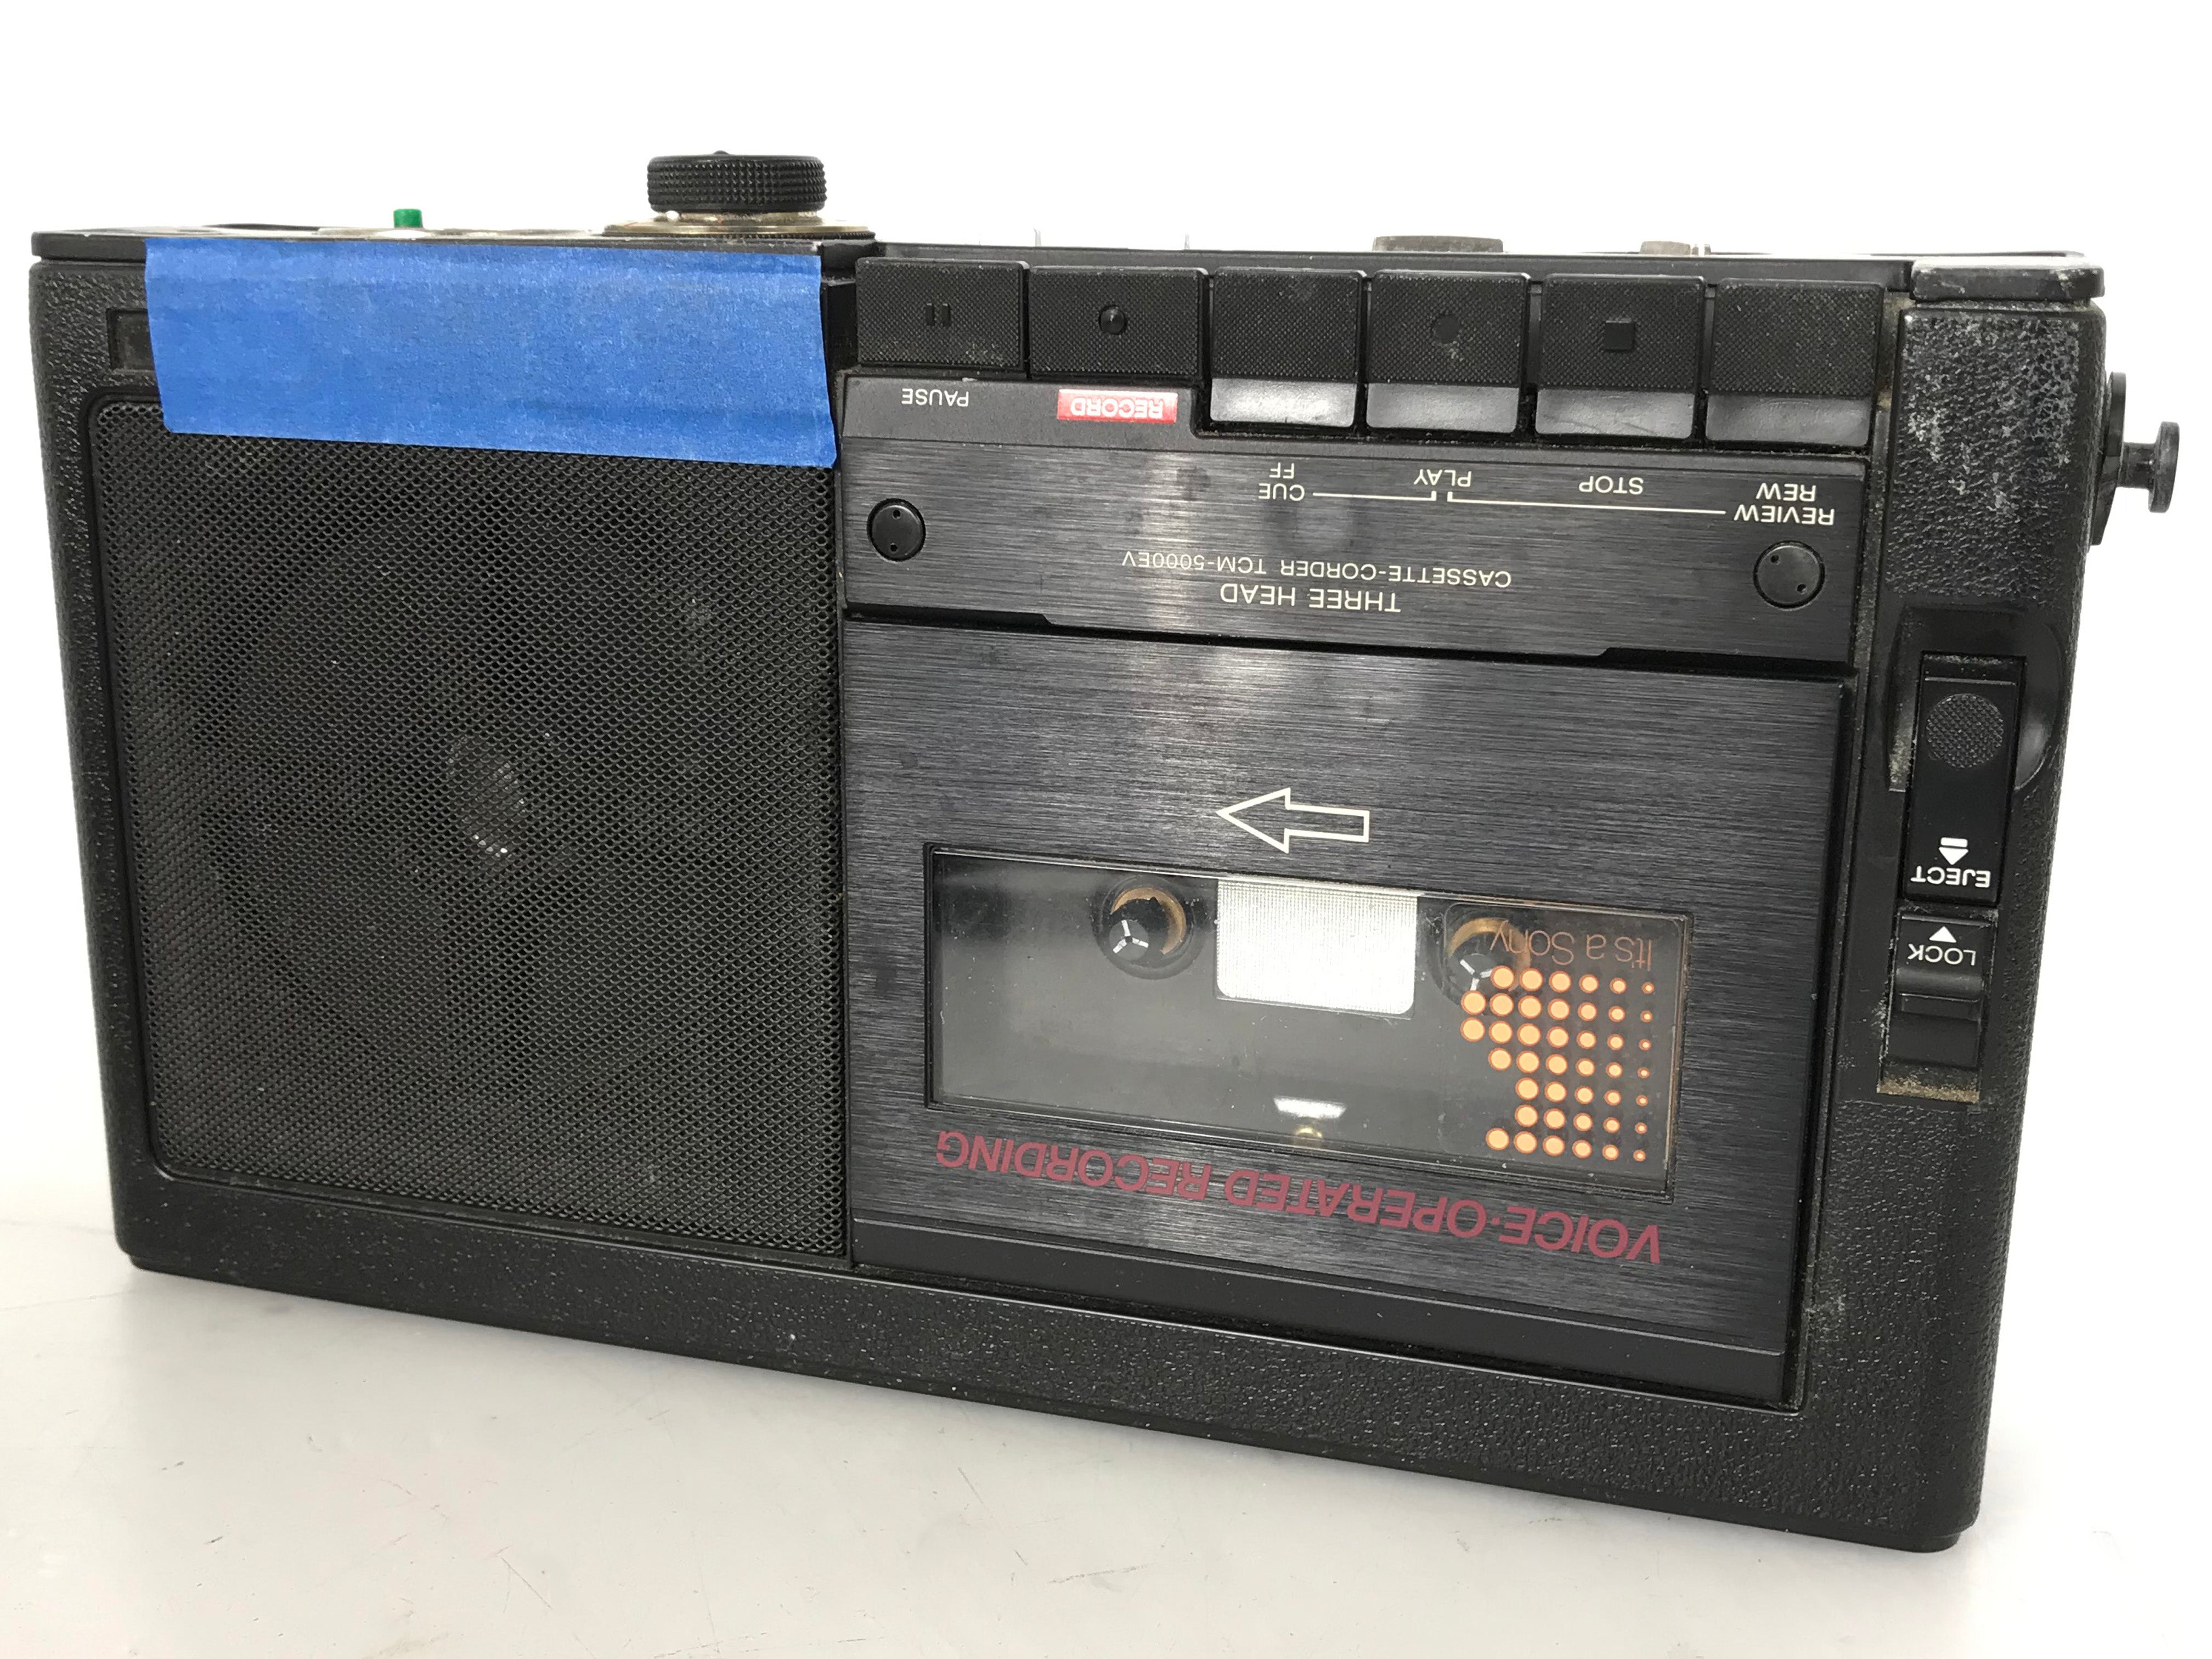 Sony TCM-5000EV Portable Cassette Recorder w/ Carrying Case